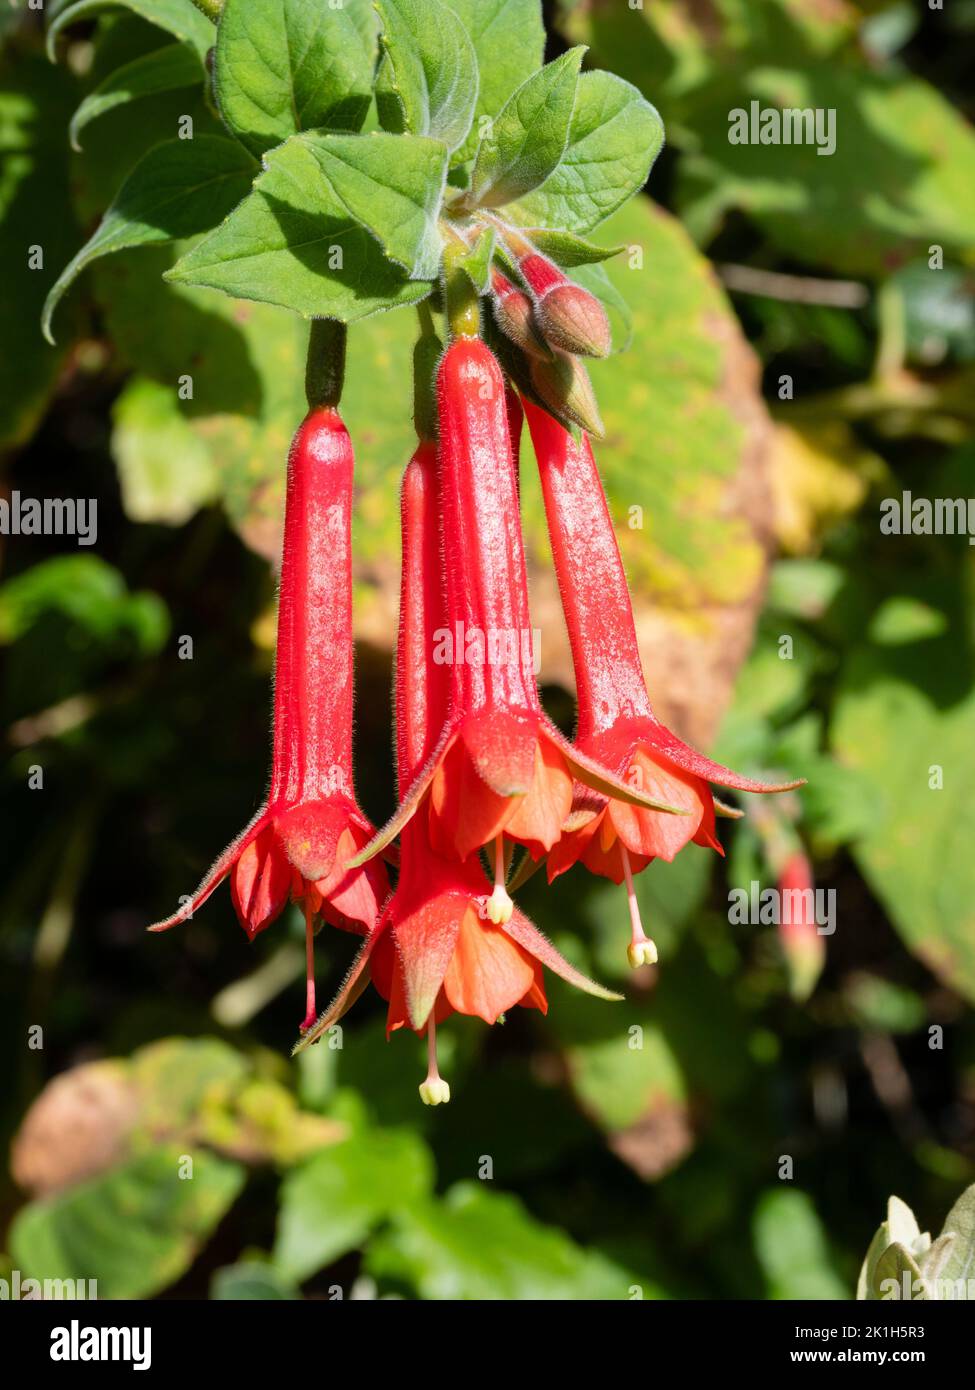 Flores tubulares rojas de punta verde de la especie fucsia arbusto, fucsia fulgens Foto de stock